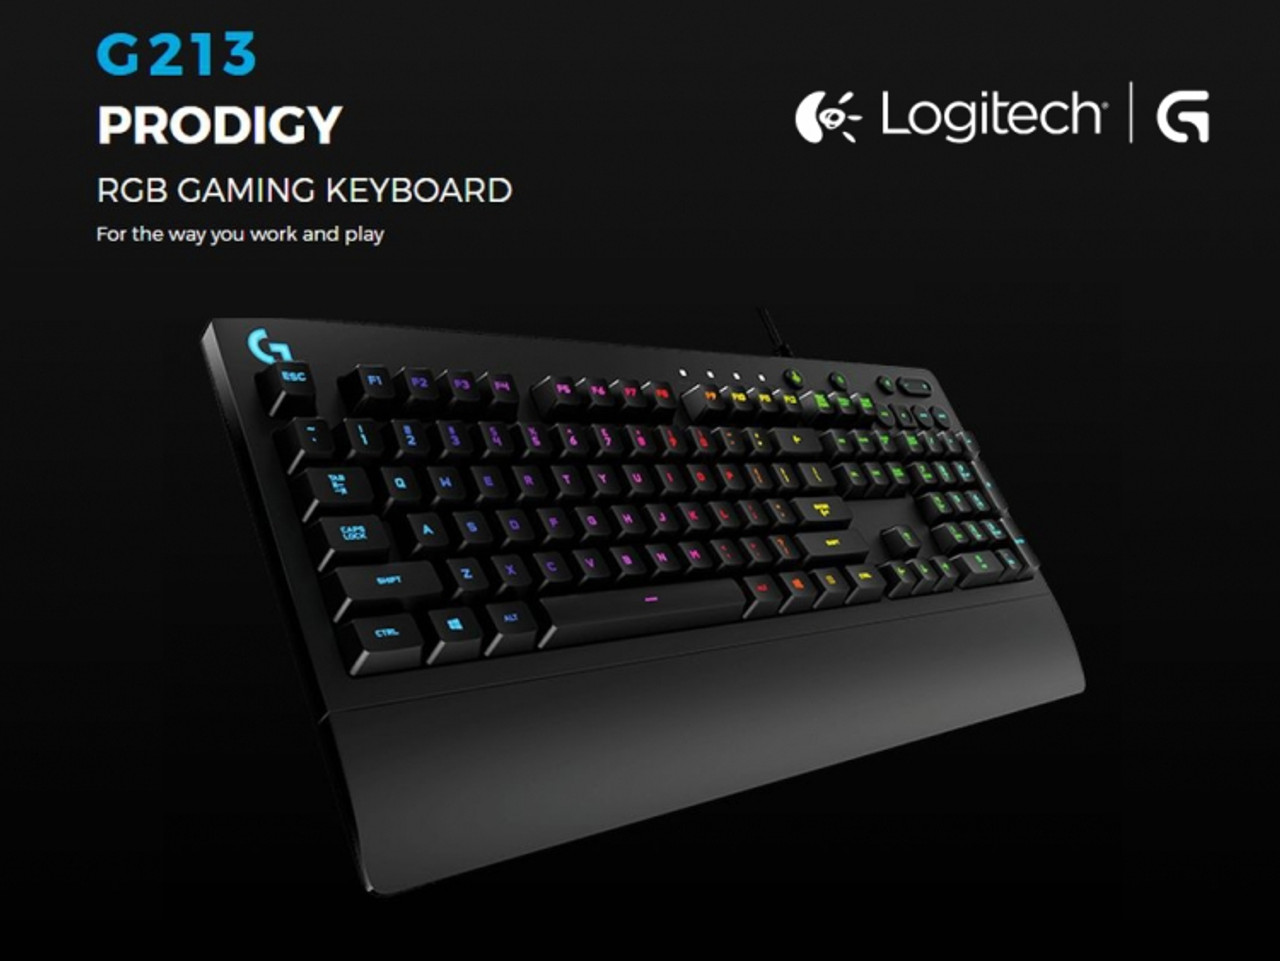 Cheapest Gaming Keyboard From Logitech..? G213 Prodigy 